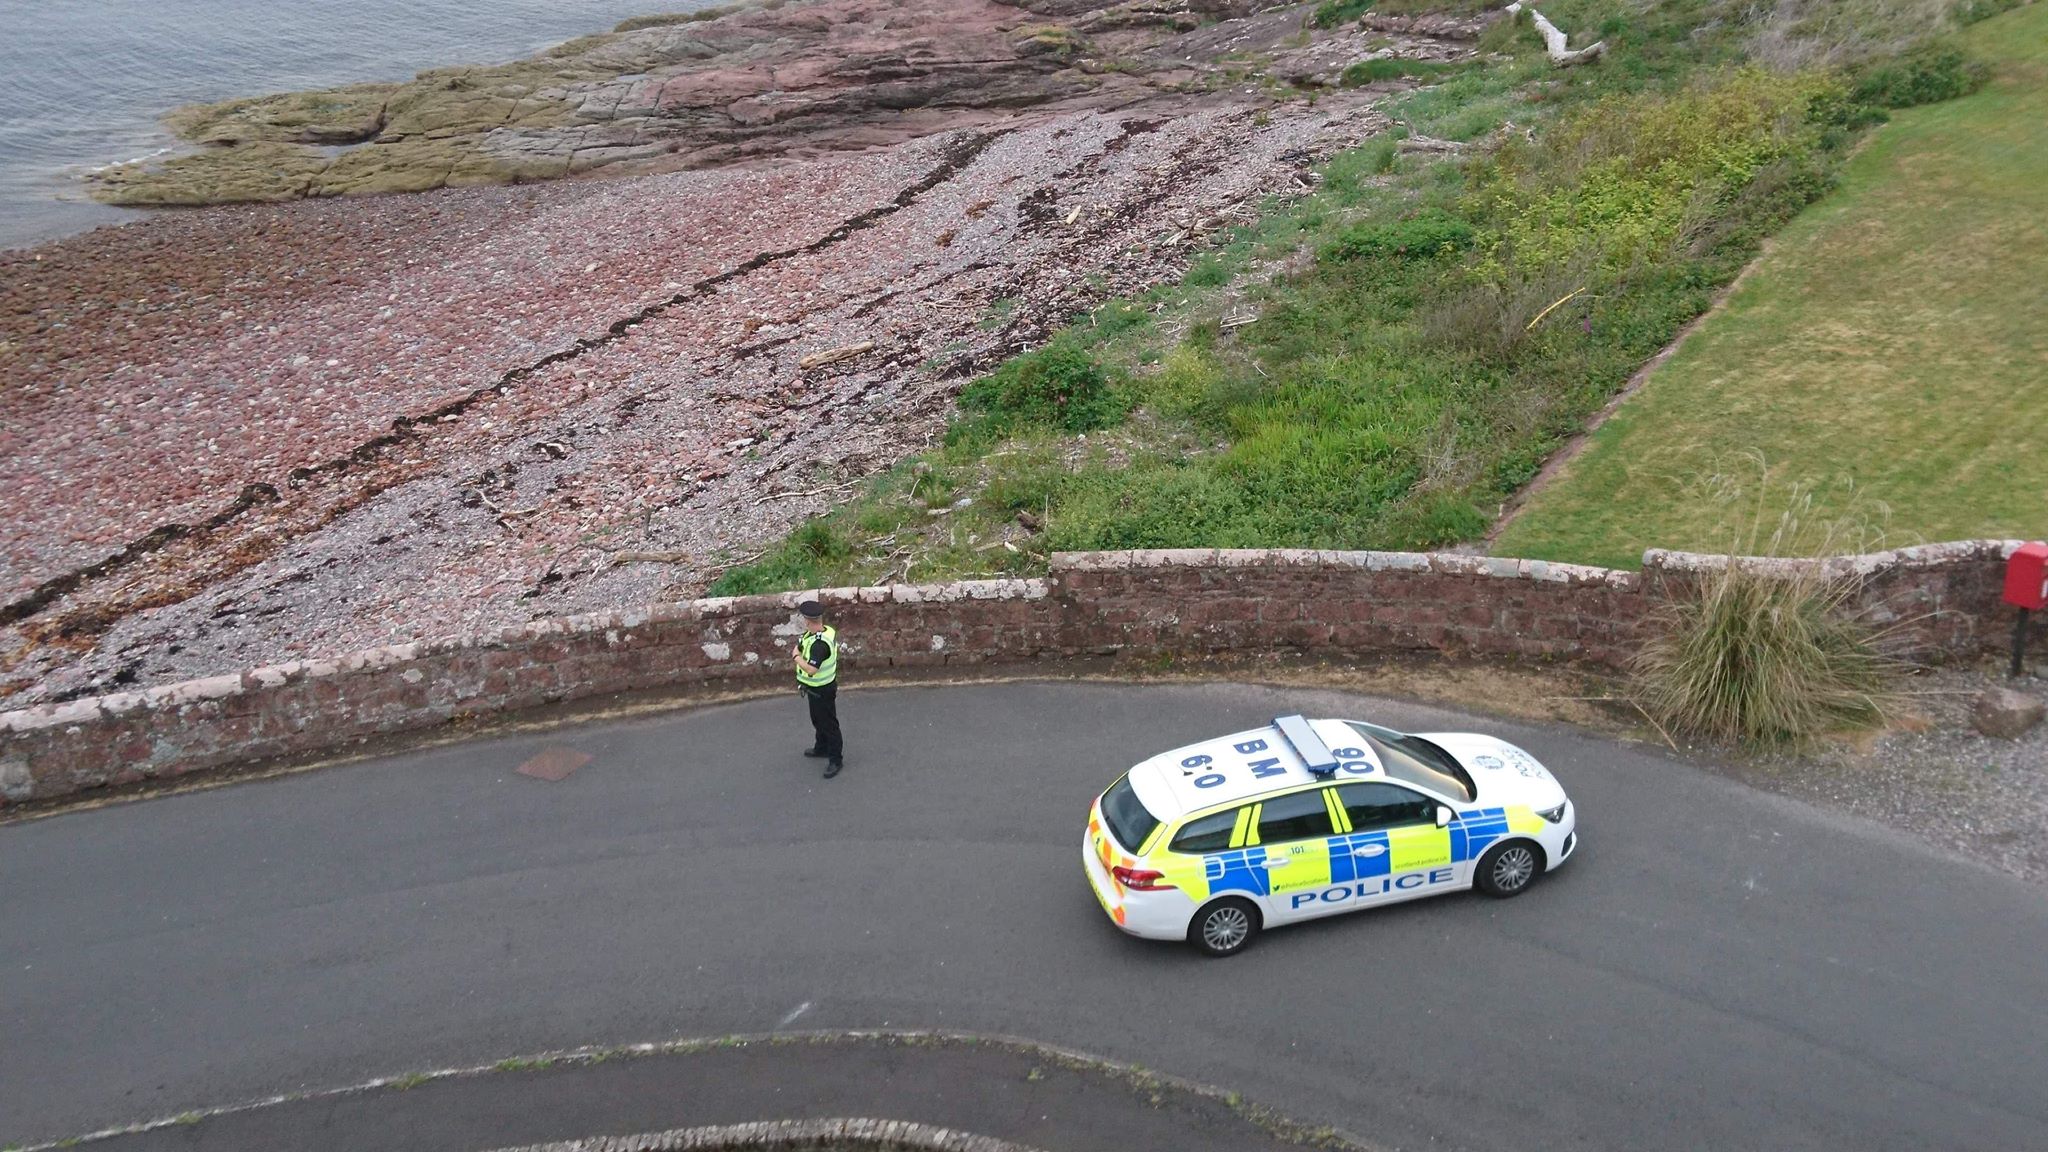 Police on the scene at Wemyss Bay.